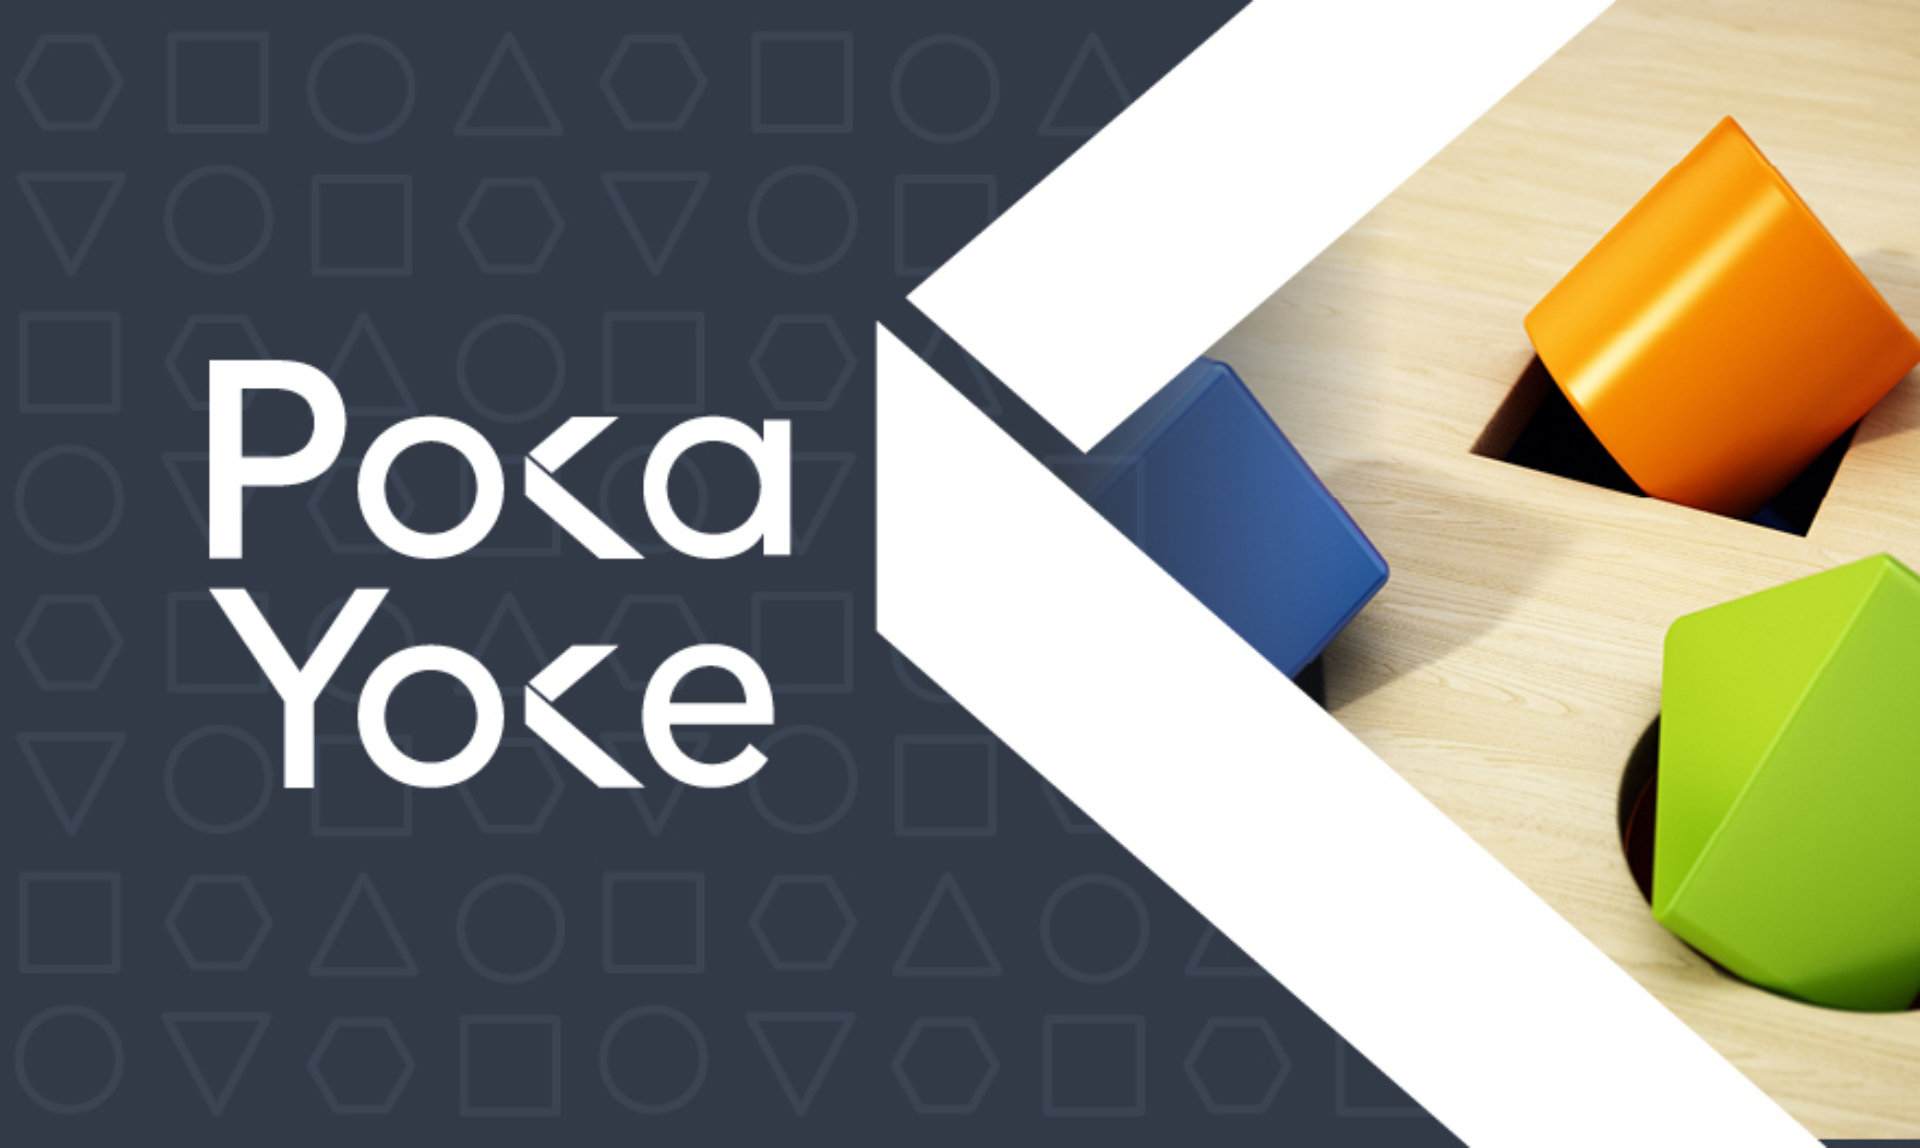 https://www.poka.io/en/blog/expanding-the-meaning-of-poka-yoke-in-lean-manufacturing